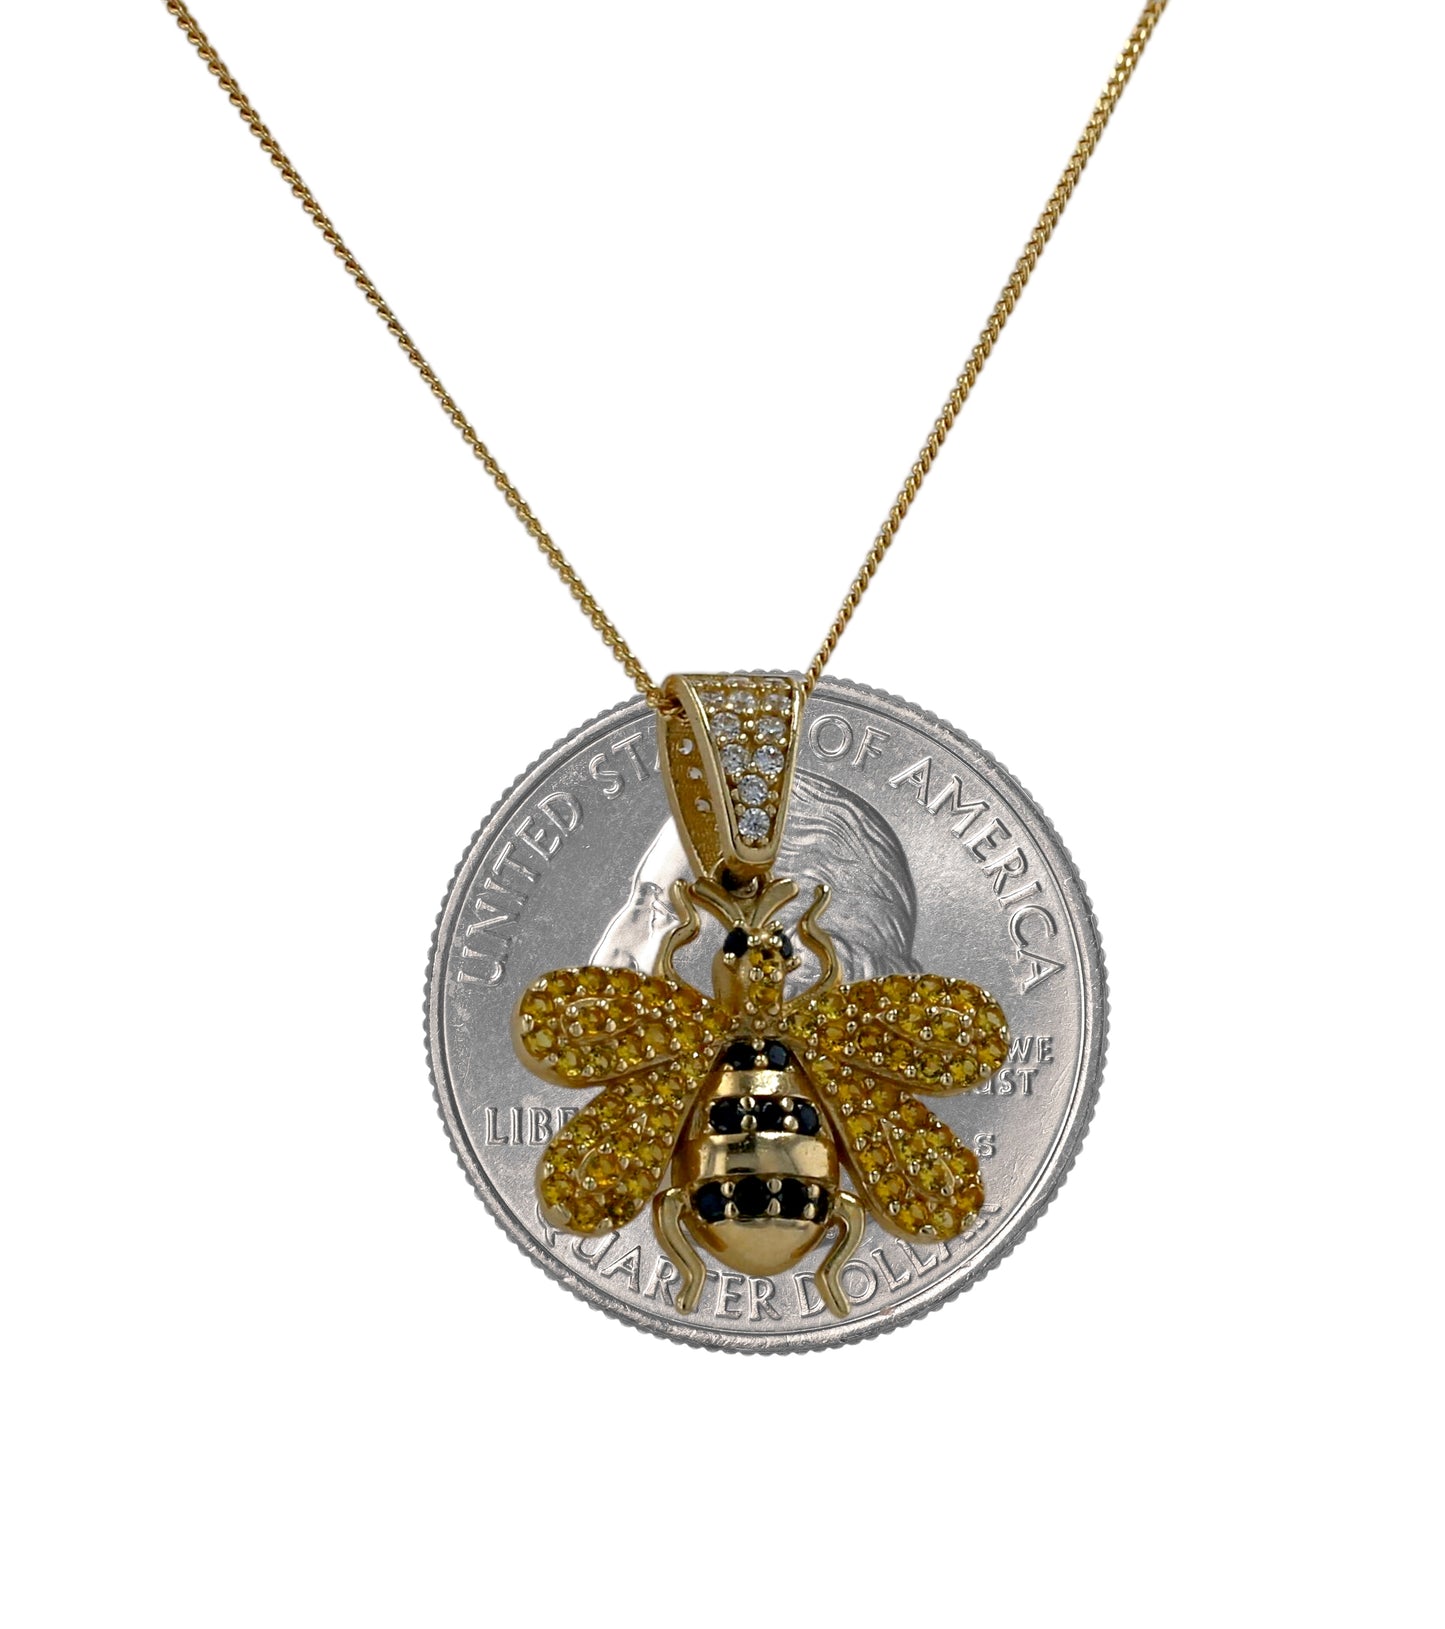 Gold 10k set bee pendant